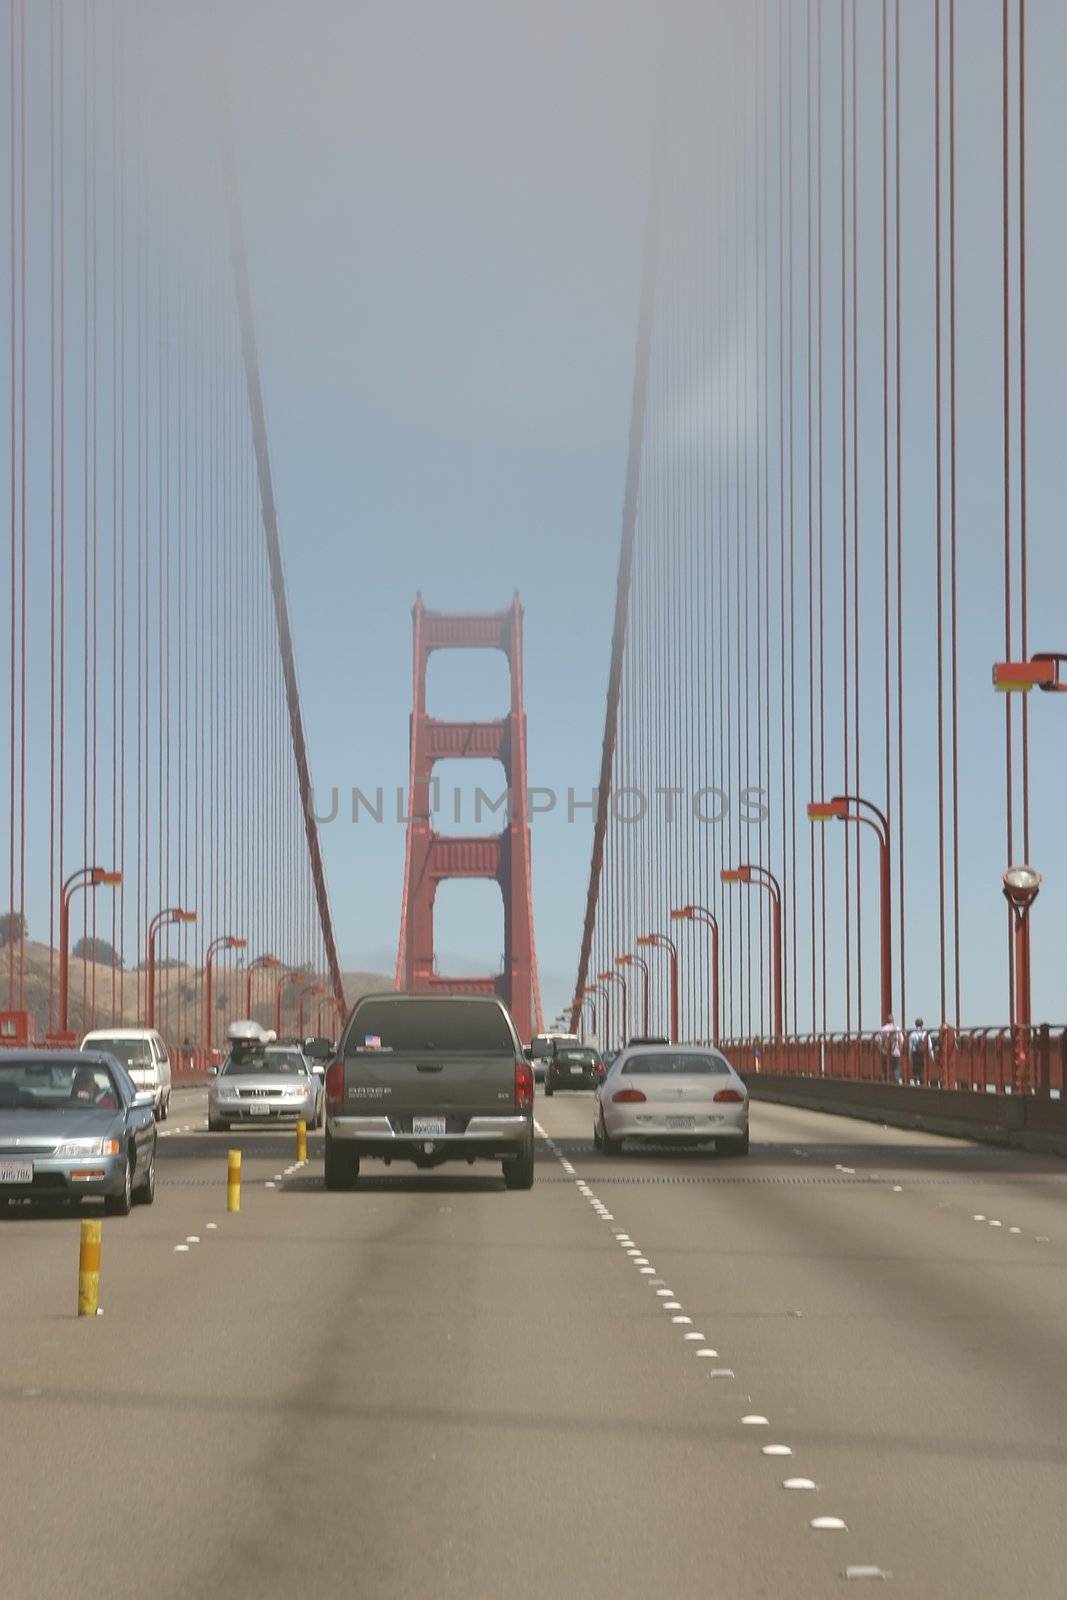 Driving thru Golden Gate bridge in San Francisco, CA